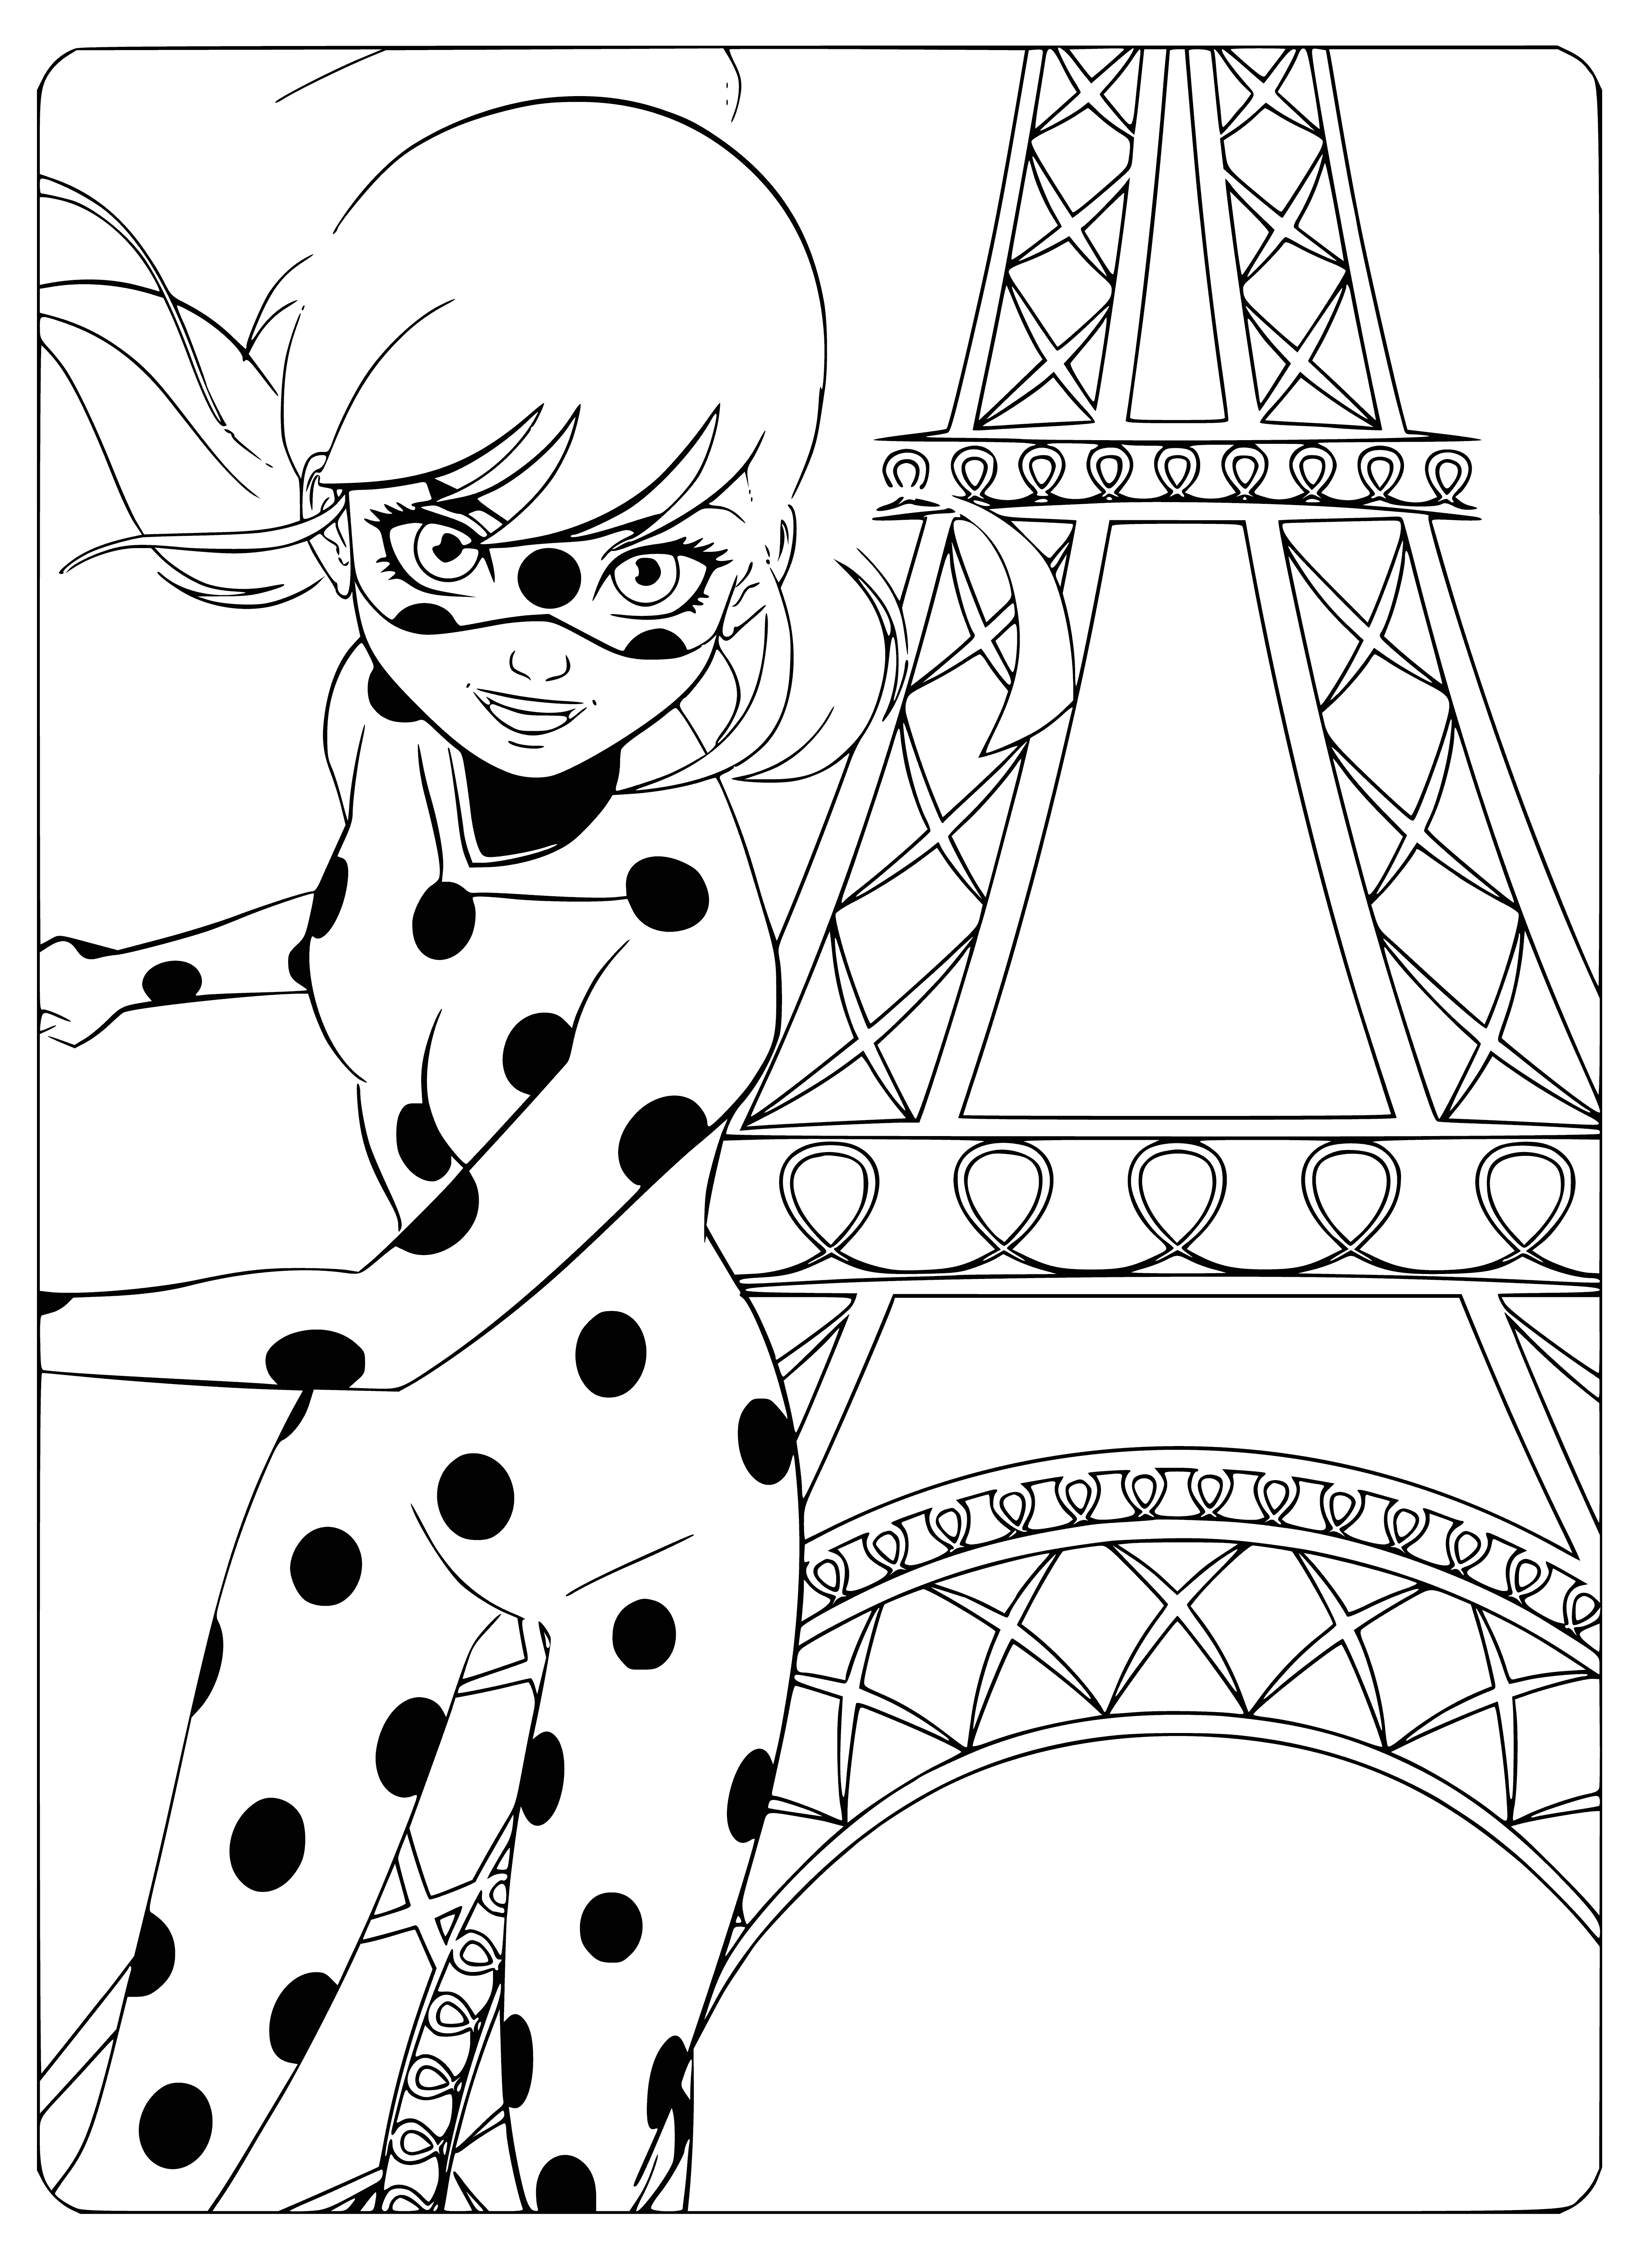 Ladybug in Paris coloring page